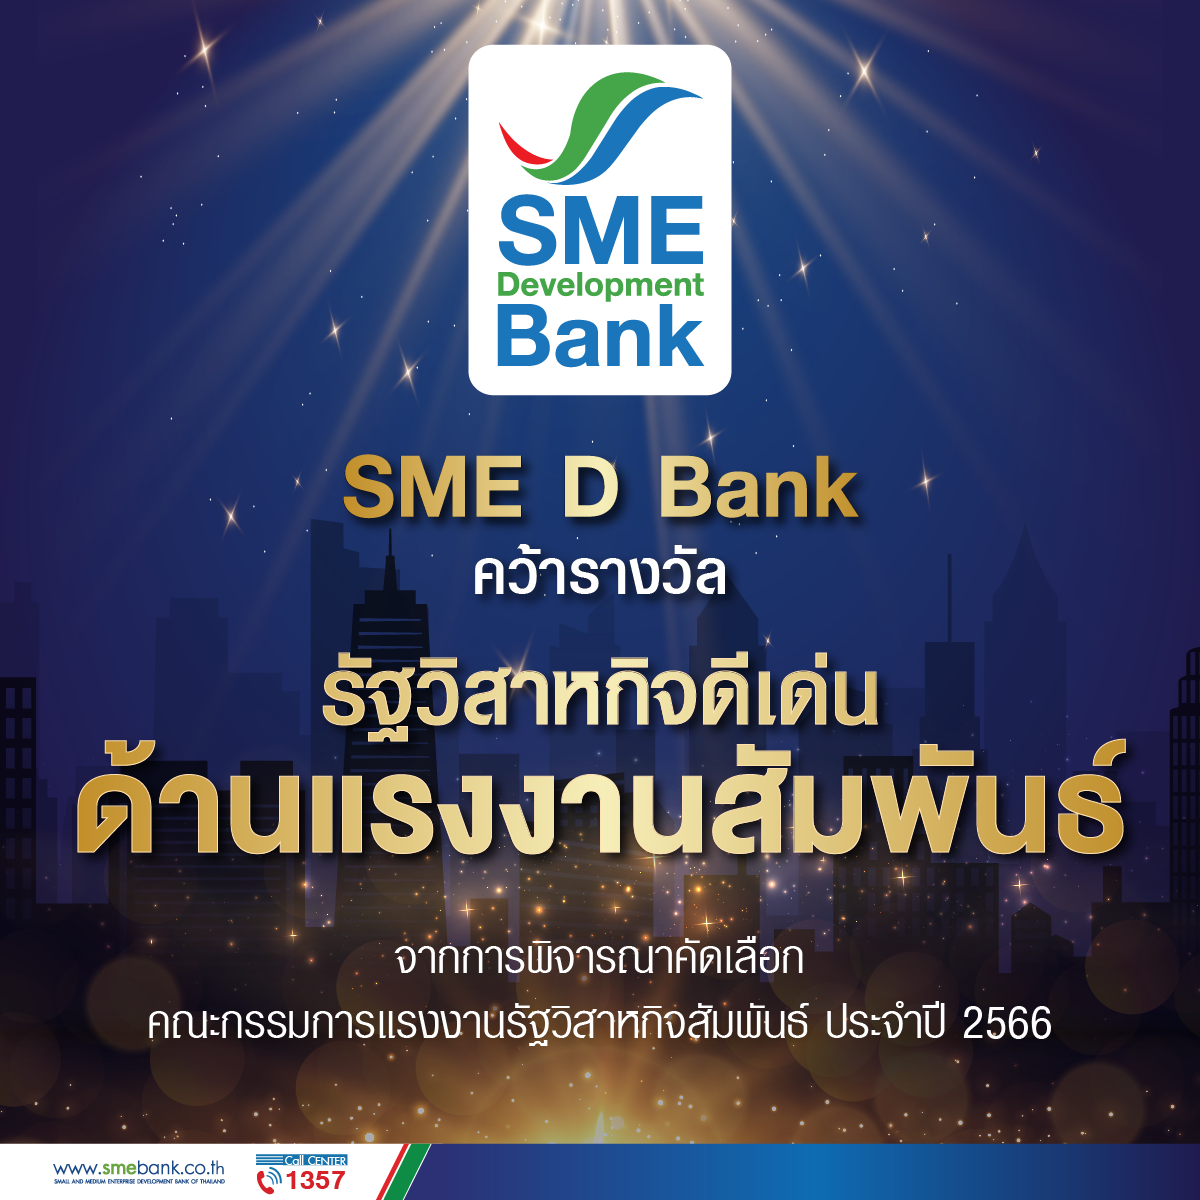 SME D Bank คว้ารางวัล รัฐวิสาหกิจดีเด่นด้านแรงงานสัมพันธ์ ประจำปี 2566 ผลสำเร็จจากการยกระดับคุณภาพชีวิตและให้คุณค่าแก่พนักงานอย่างต่อเนื่อง